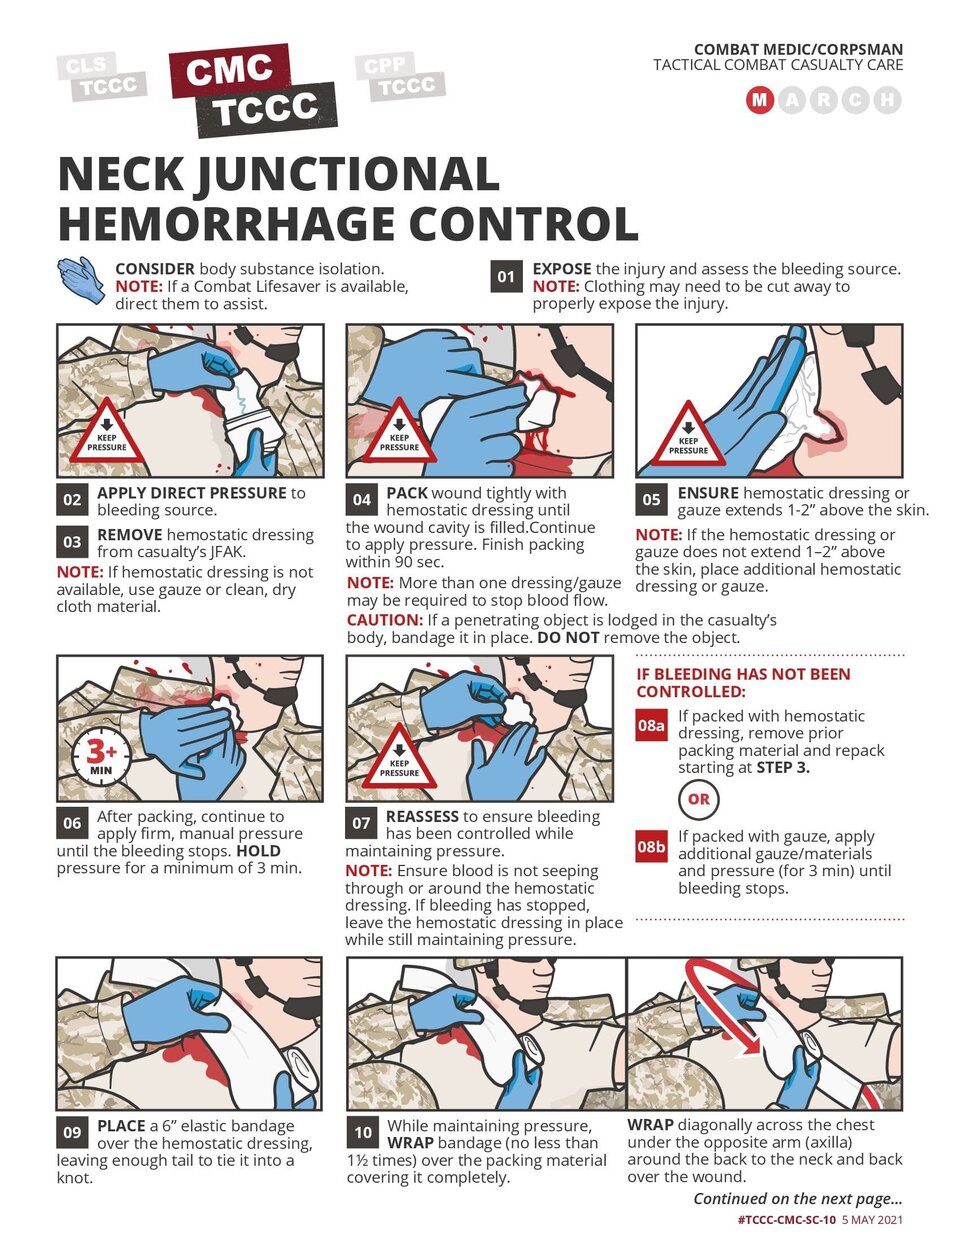 Neck junctional hemorrhage control